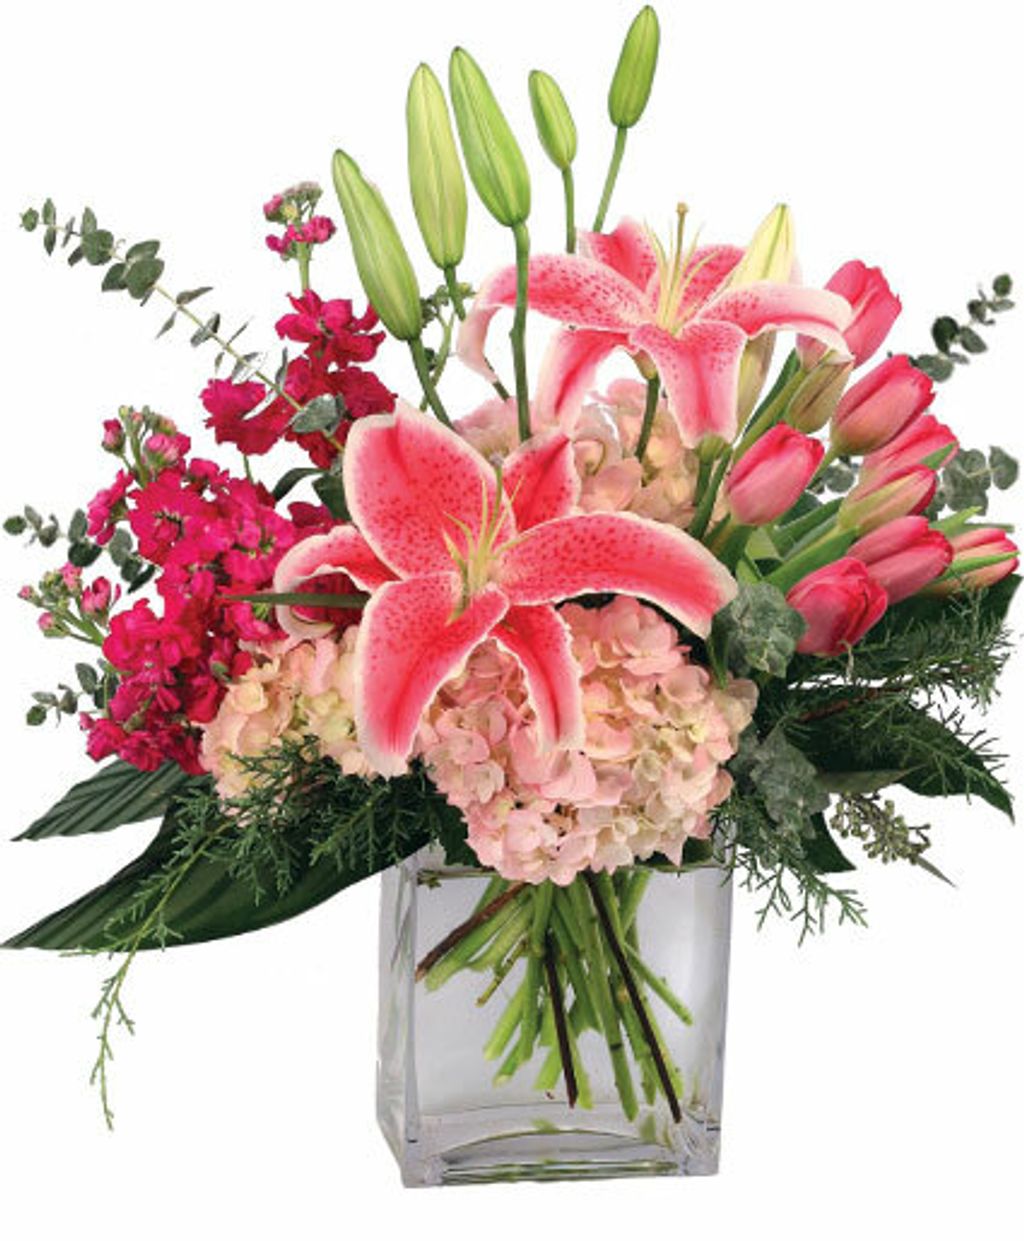 treasured-pinks-floral-arrangement-VA92119.425